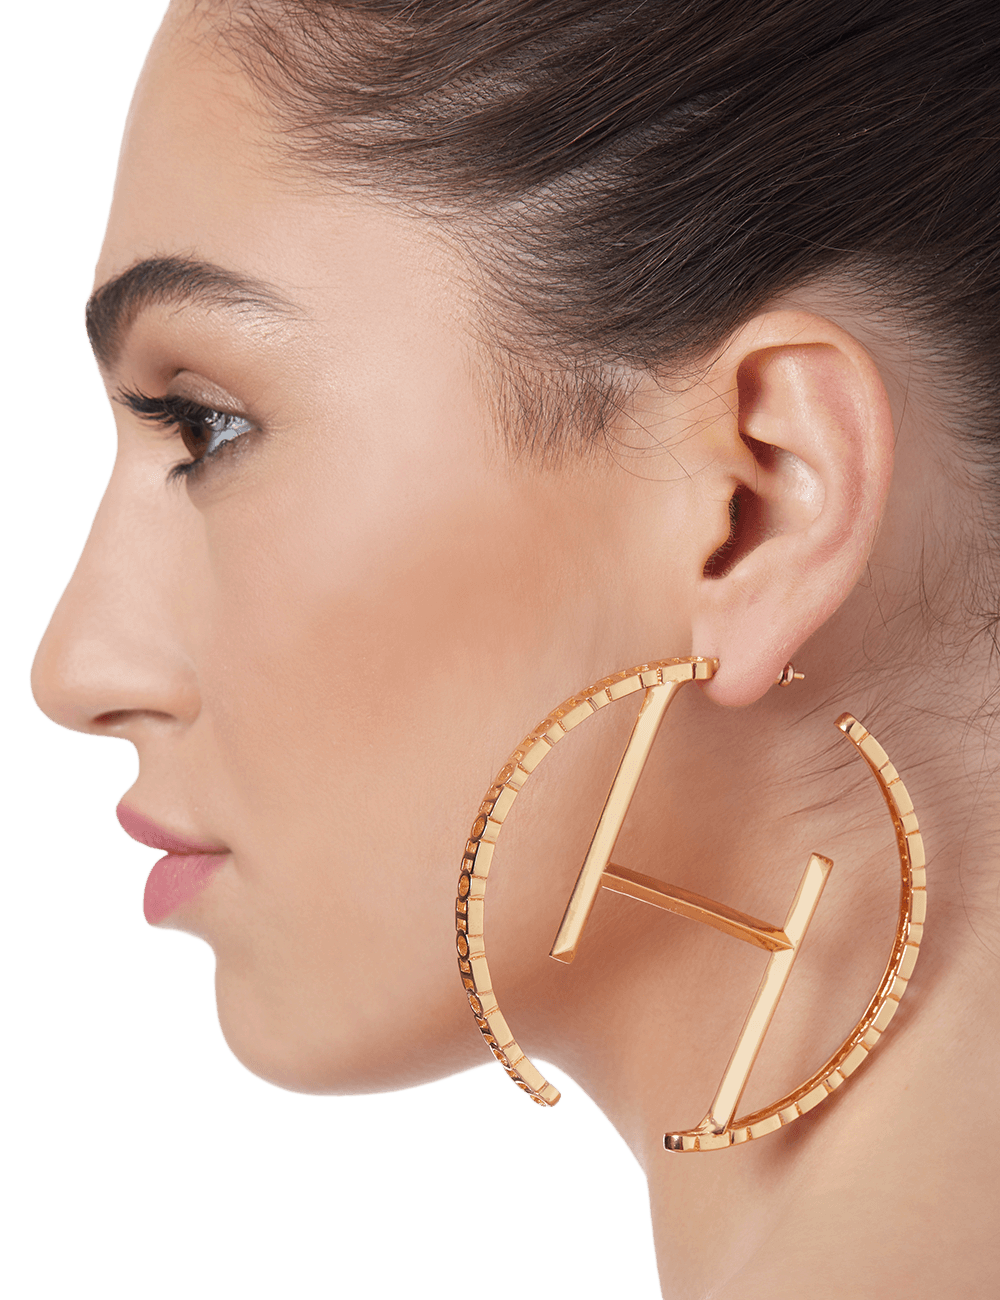 Silver Hoop Earrings, Silver Hoops, 13mm to 51mm Boho Earrings, Small  Medium Large Women Earrings, Minimalist Everyday Lightweight Jewelry - Etsy  | Hoop earrings small, Emerald earrings studs, Diamond earrings studs